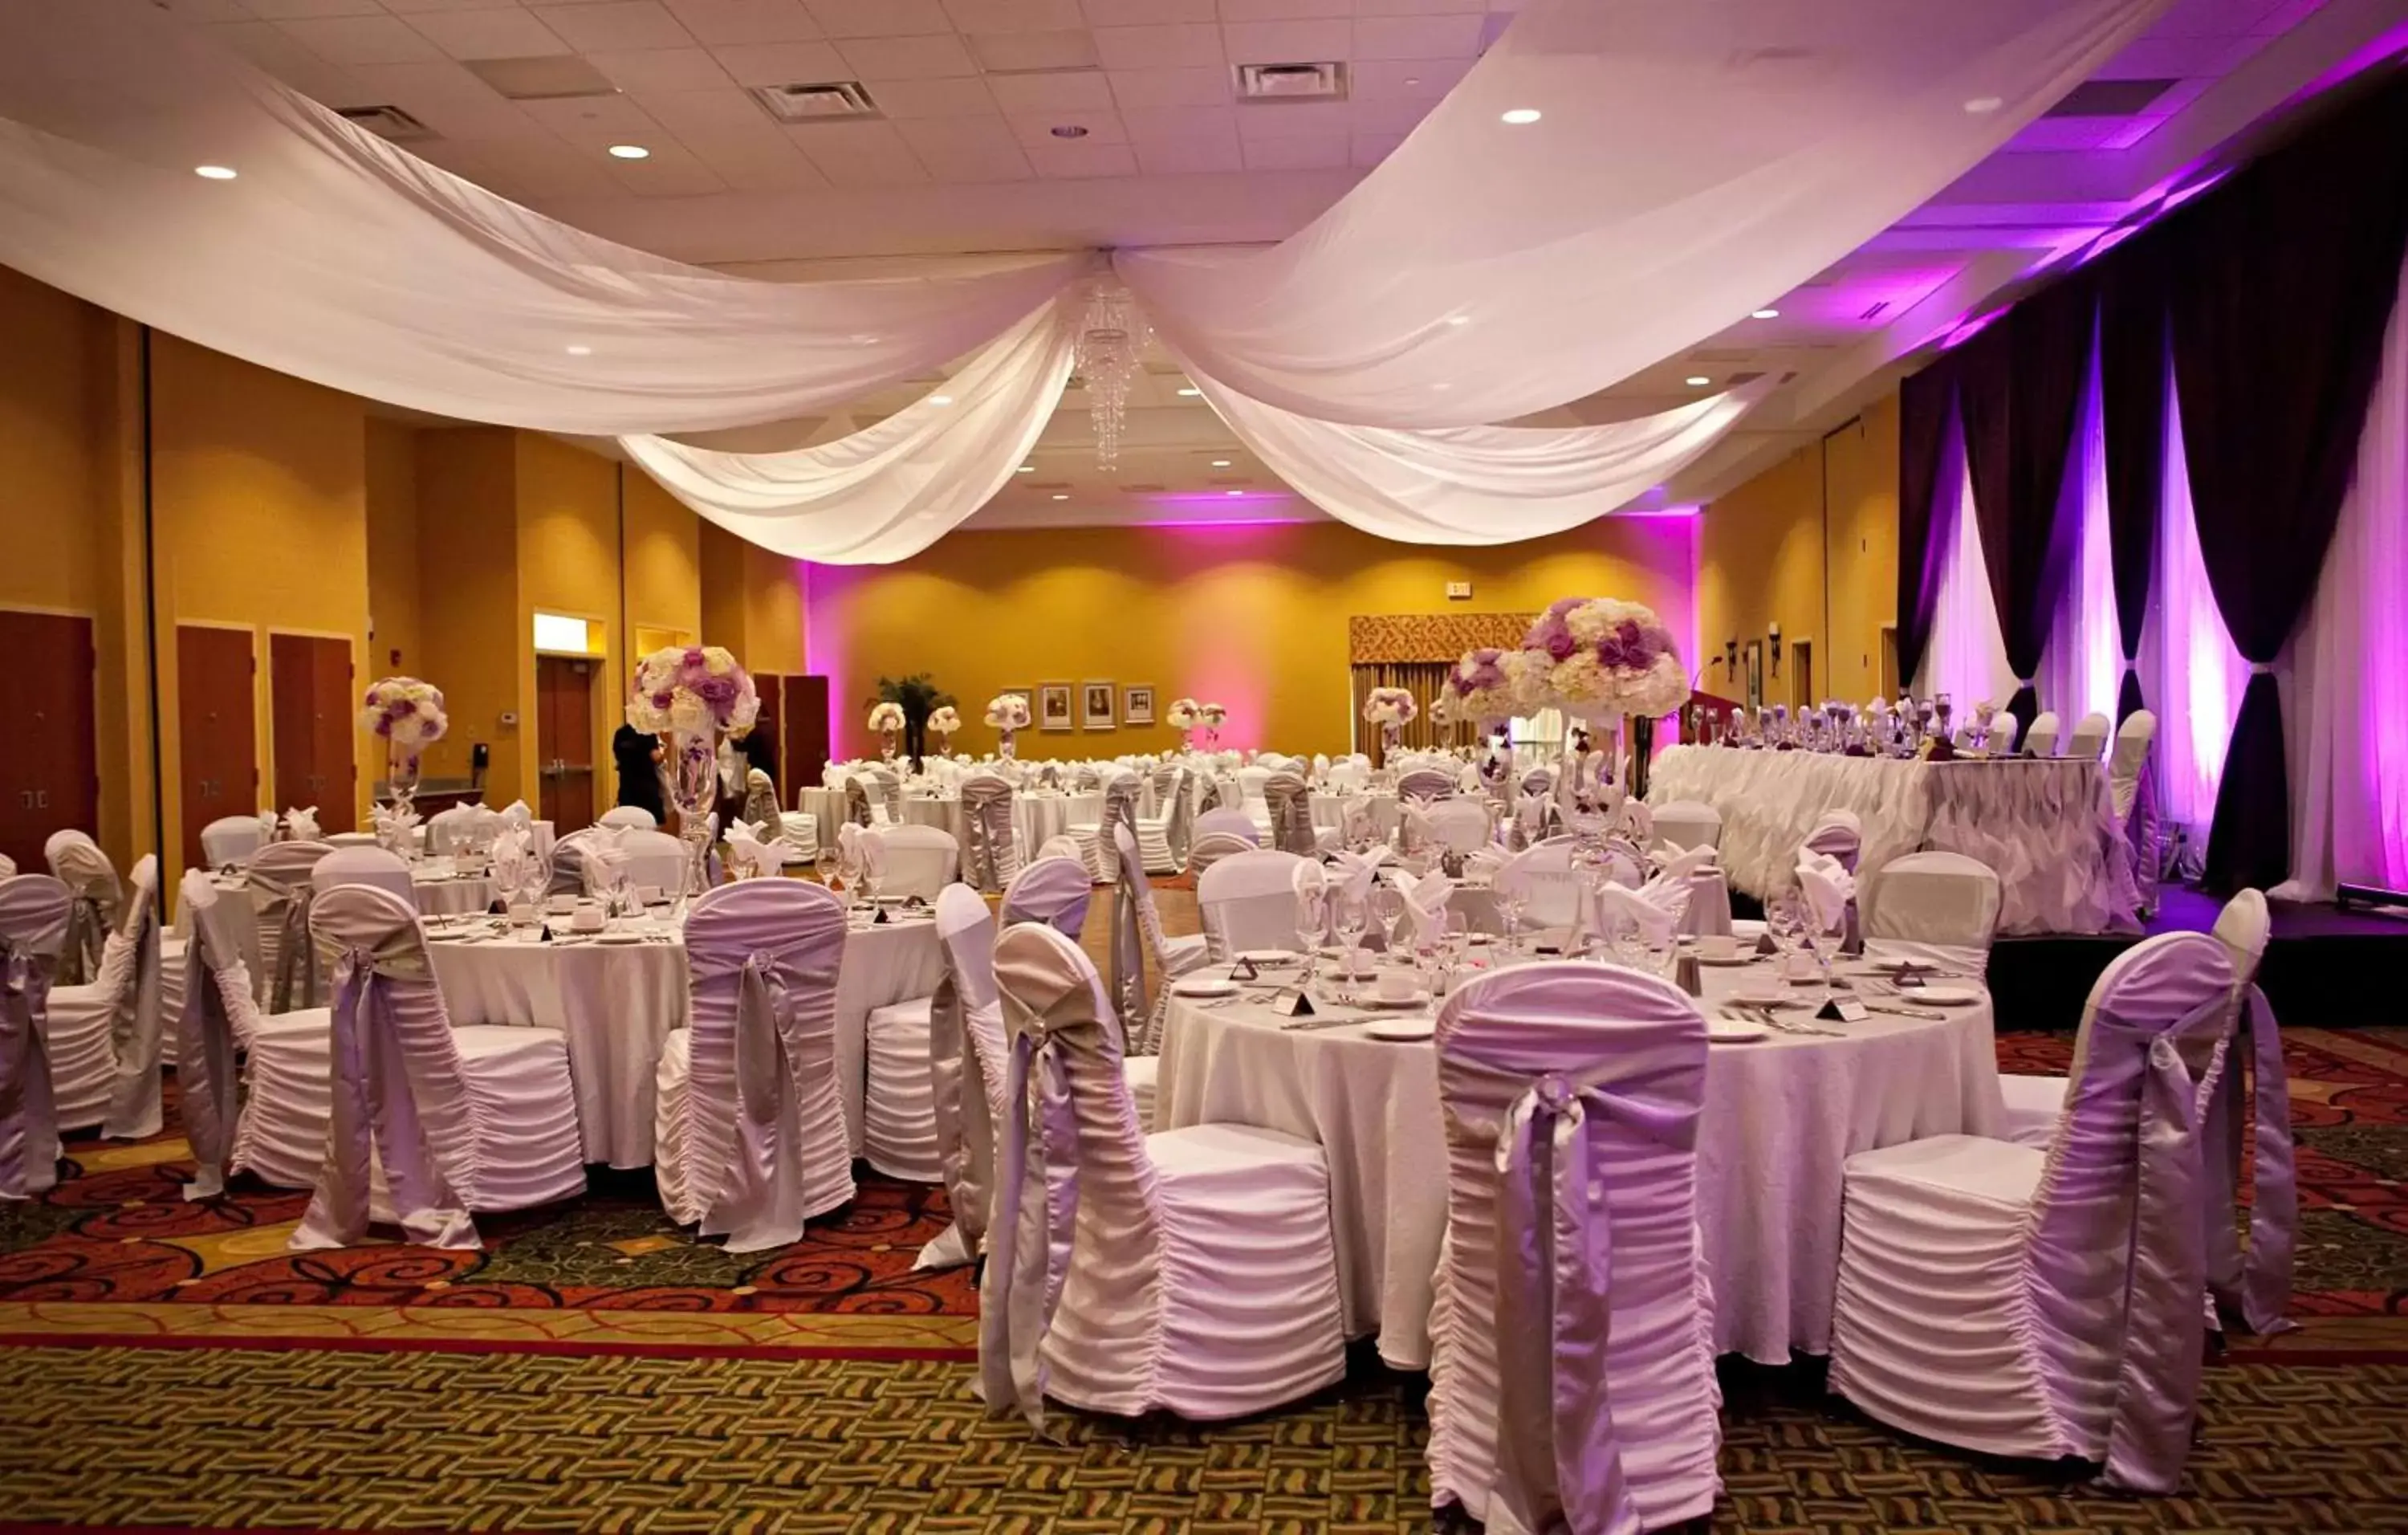 Meeting/conference room, Banquet Facilities in Hilton Garden Inn Ottawa Airport